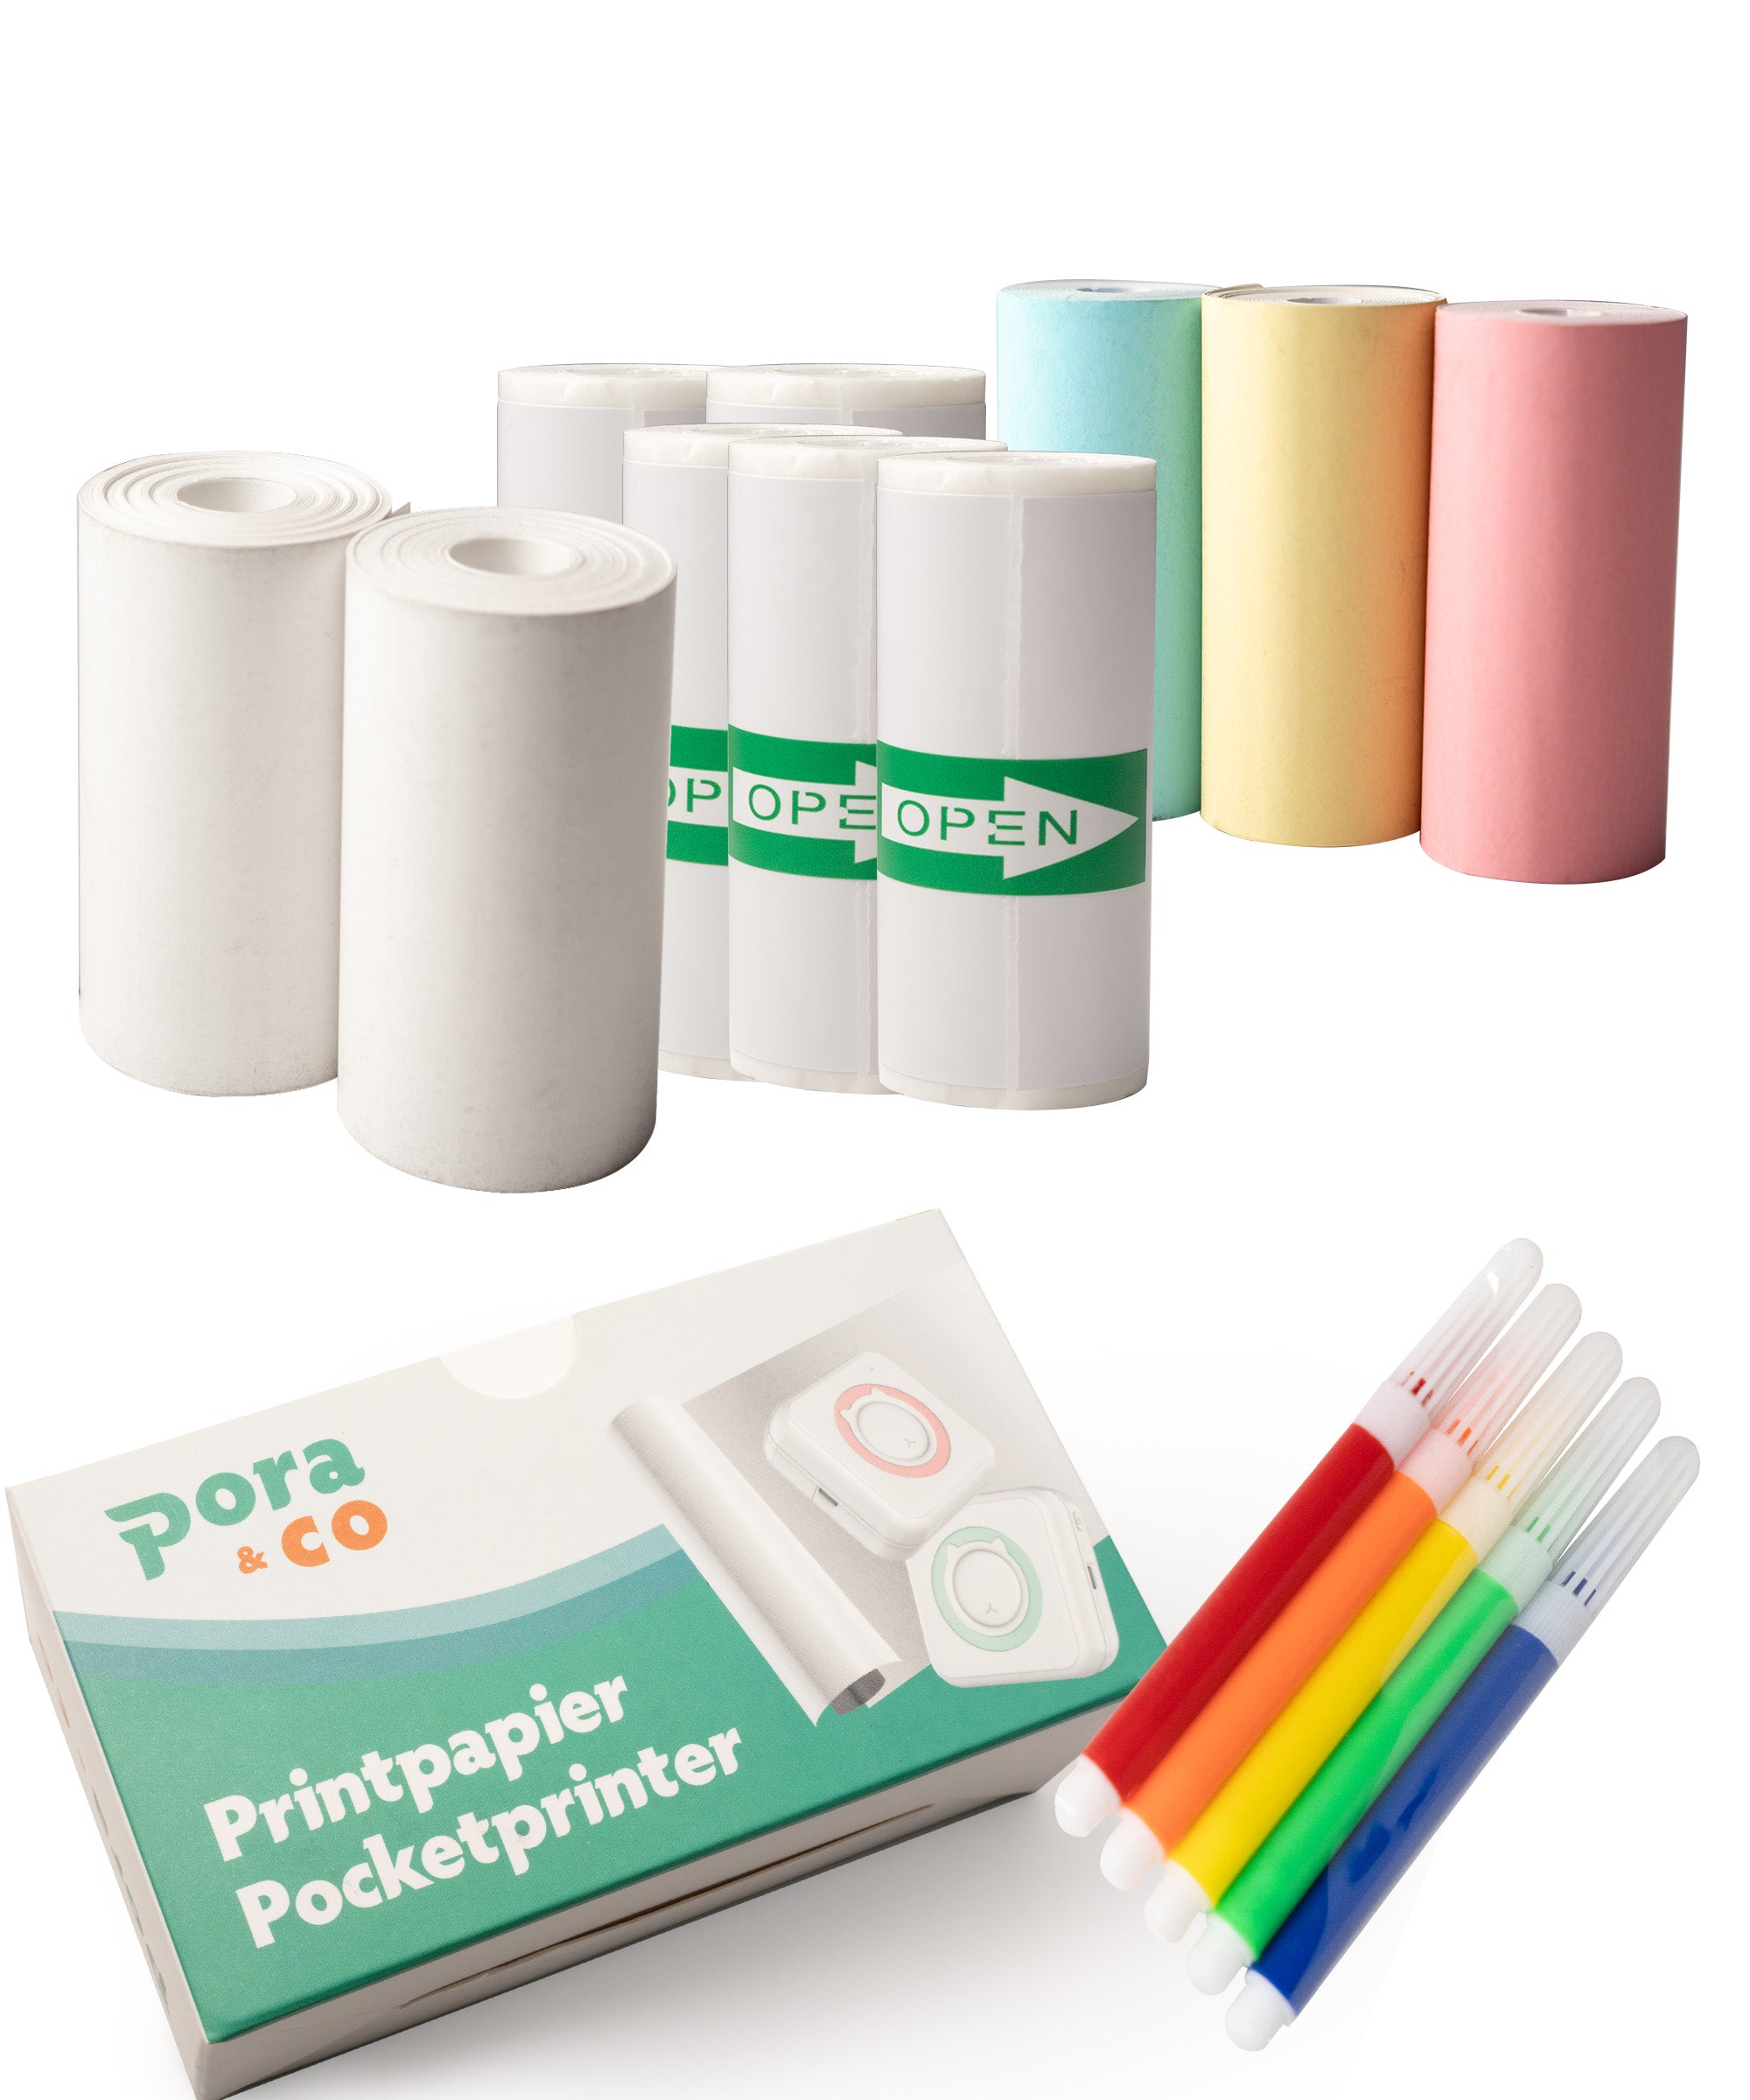 Fotopapier en stickerpapier navulling pocket printer - C15